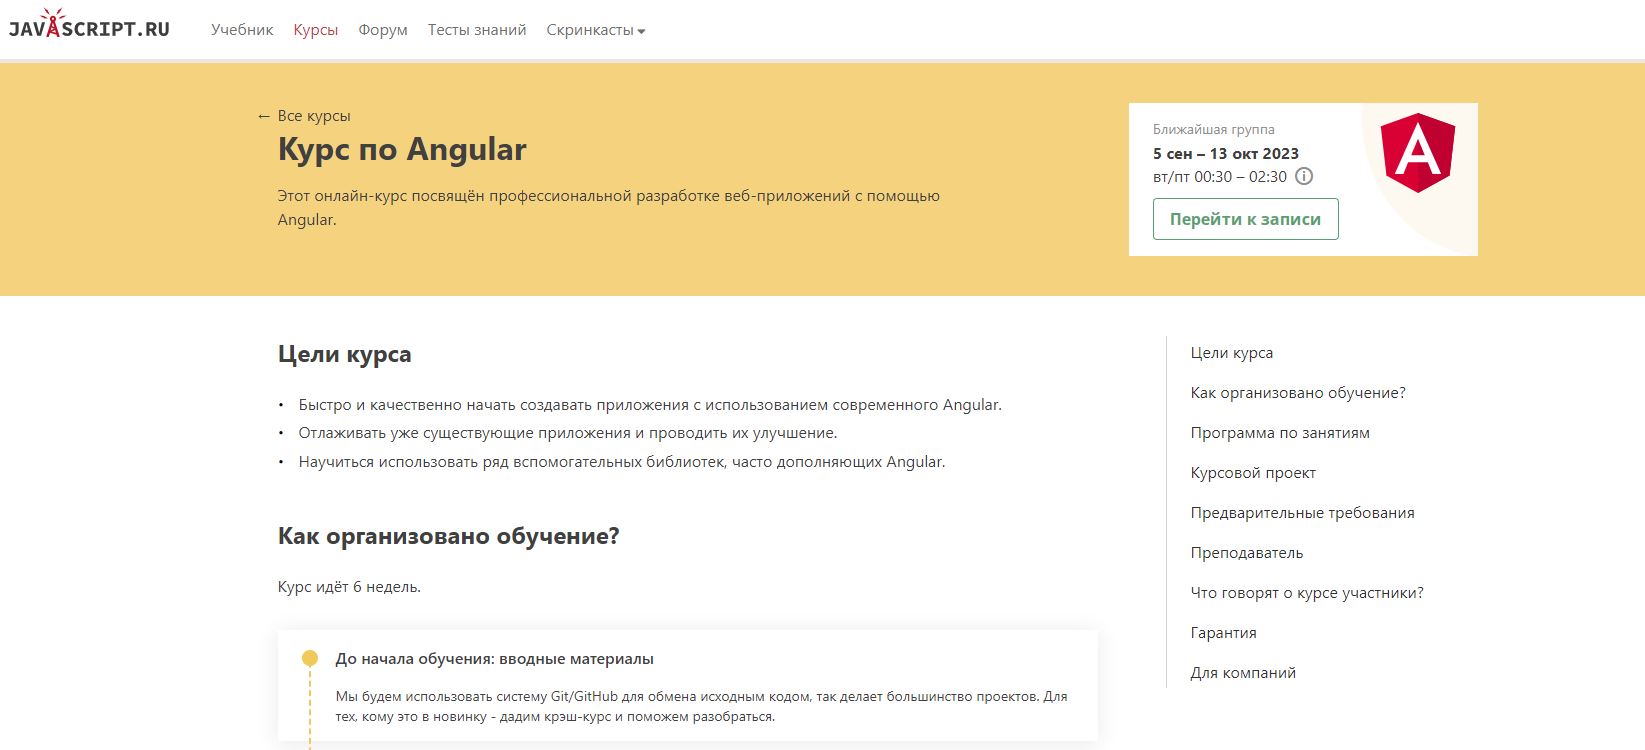 Курс по Angular от Learn.Javascript.ru